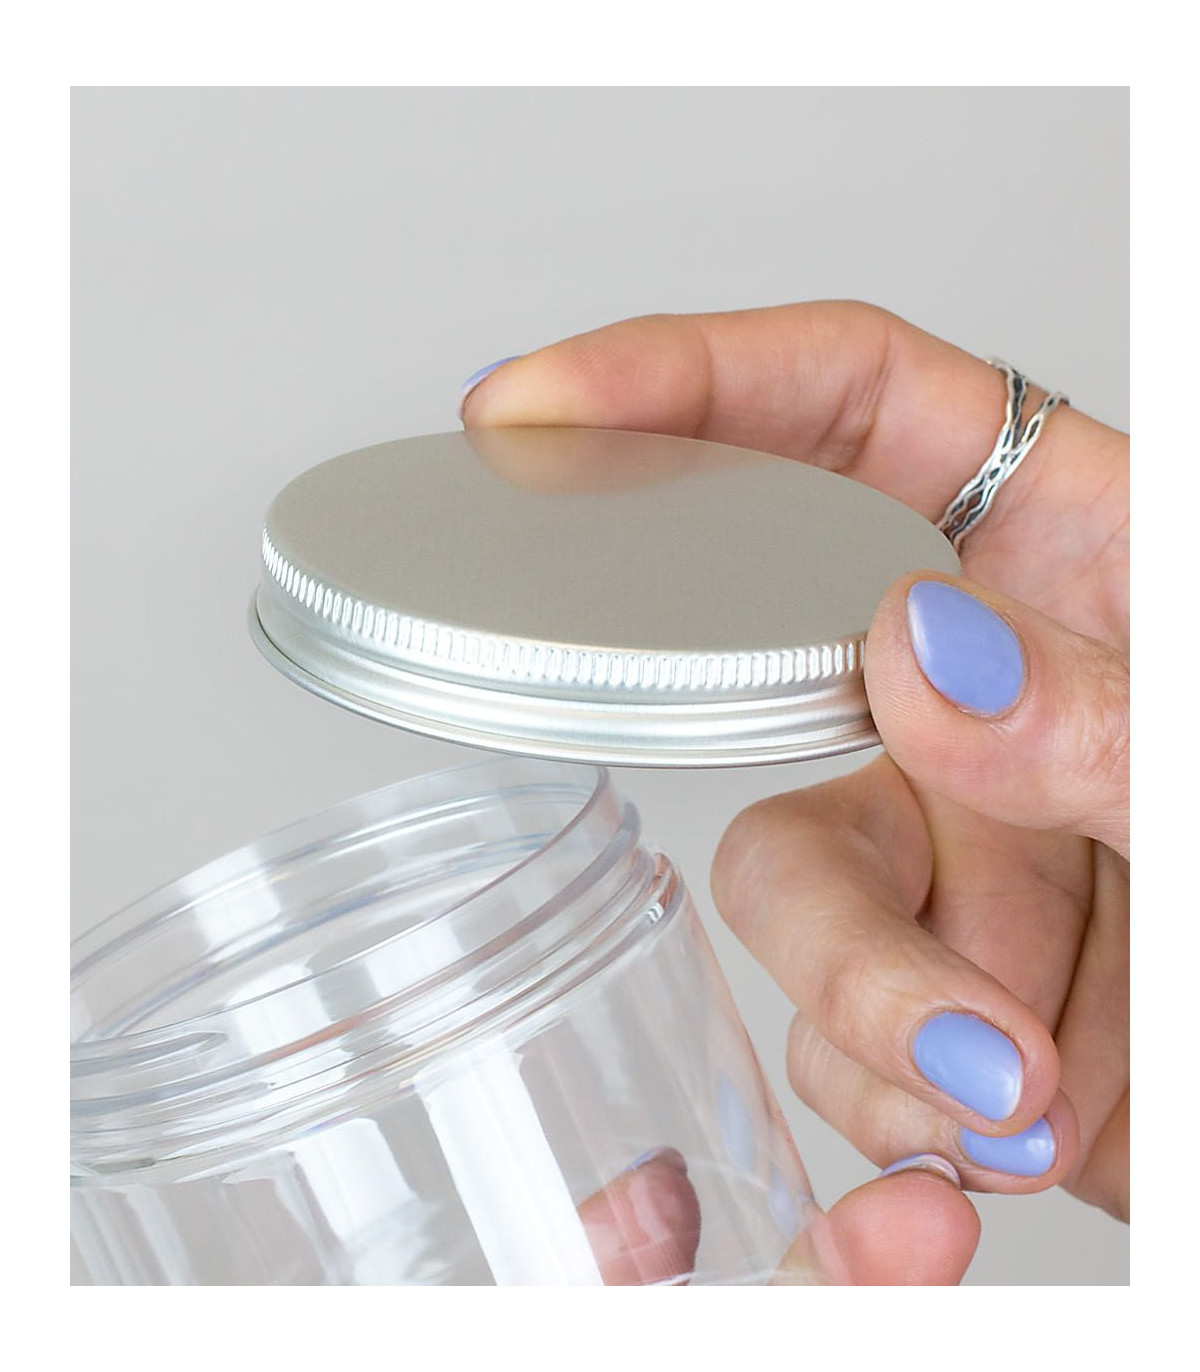 Lid PET jar 100 and 200 ml